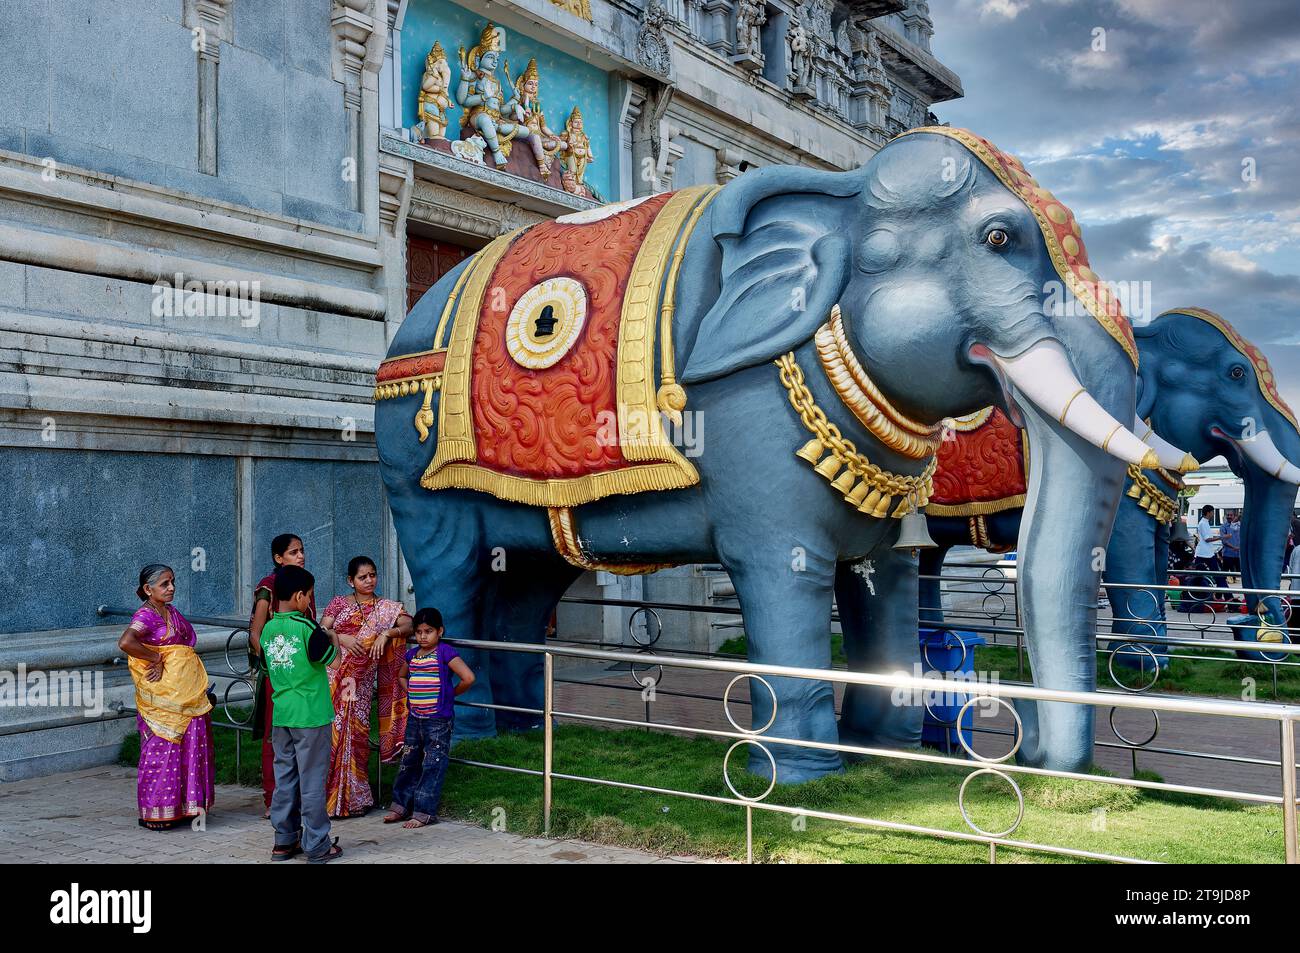 I turisti si trovano accanto a due statue di elefanti a guardia dell'ingresso al tempio Murdeshwara (Murudeshwara) a Murdeshwar, Karnataka, India. Foto Stock